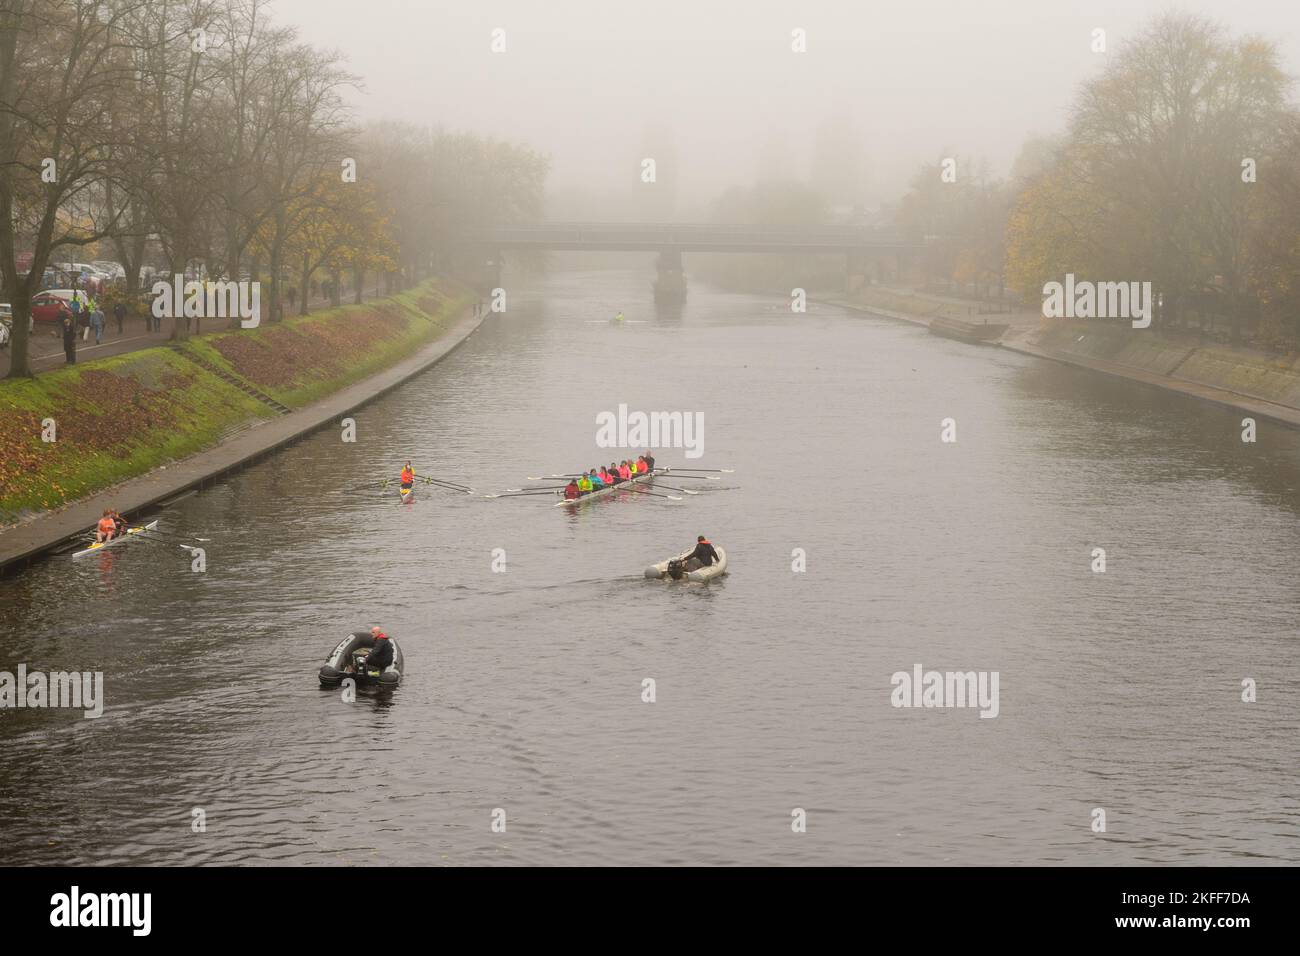 Ruderteam am Fluss Ouse, York, November Mist and Fog, Großbritannien Stockfoto